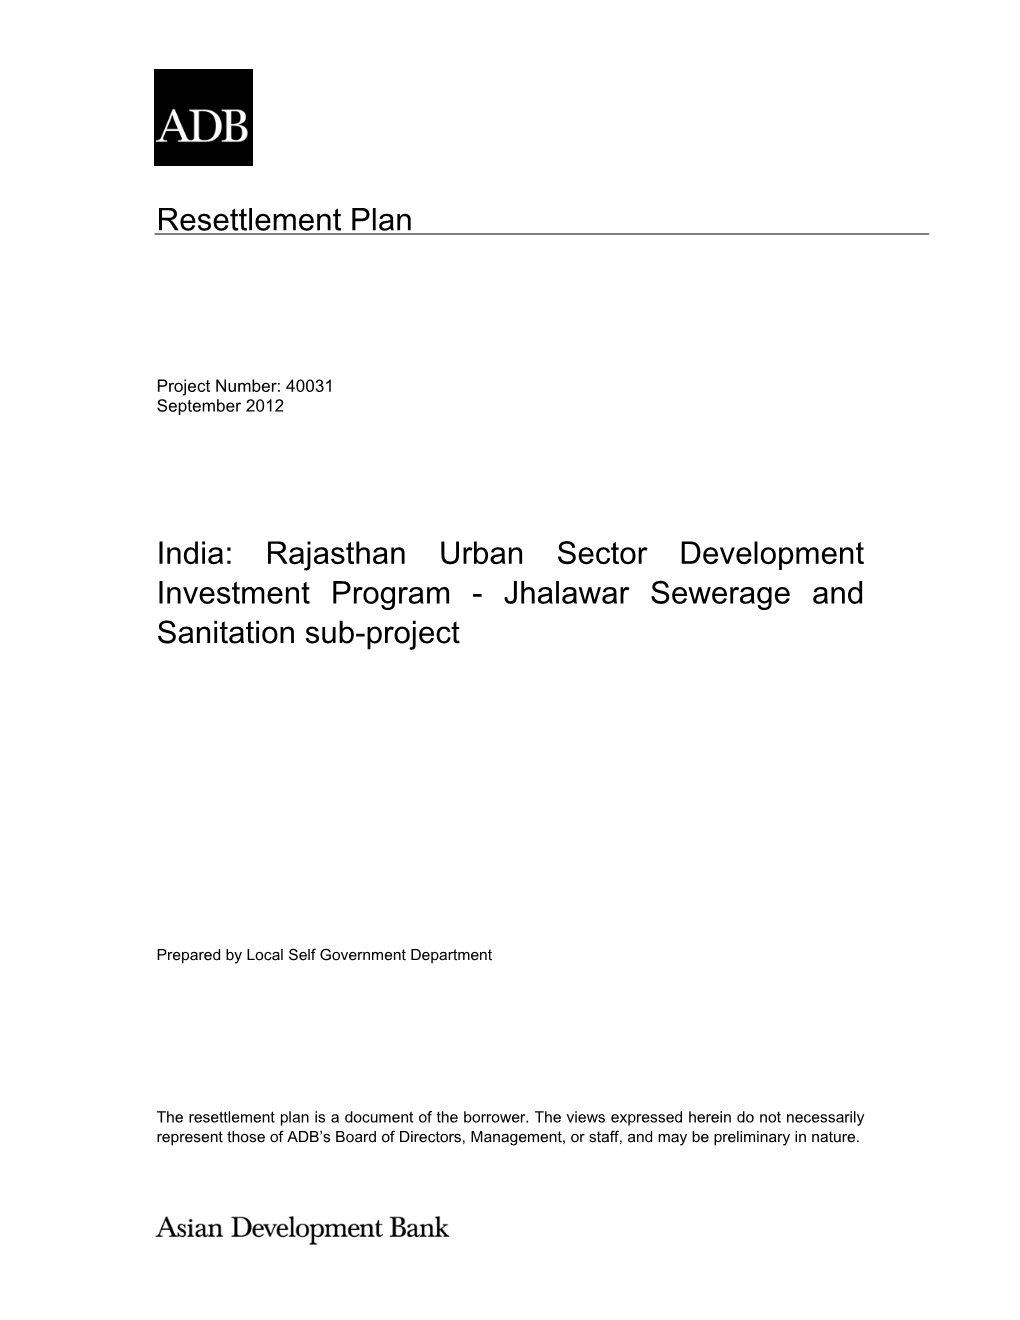 Jhalawar Sewerage and Sanitation Subproject, Rajasthan Urban